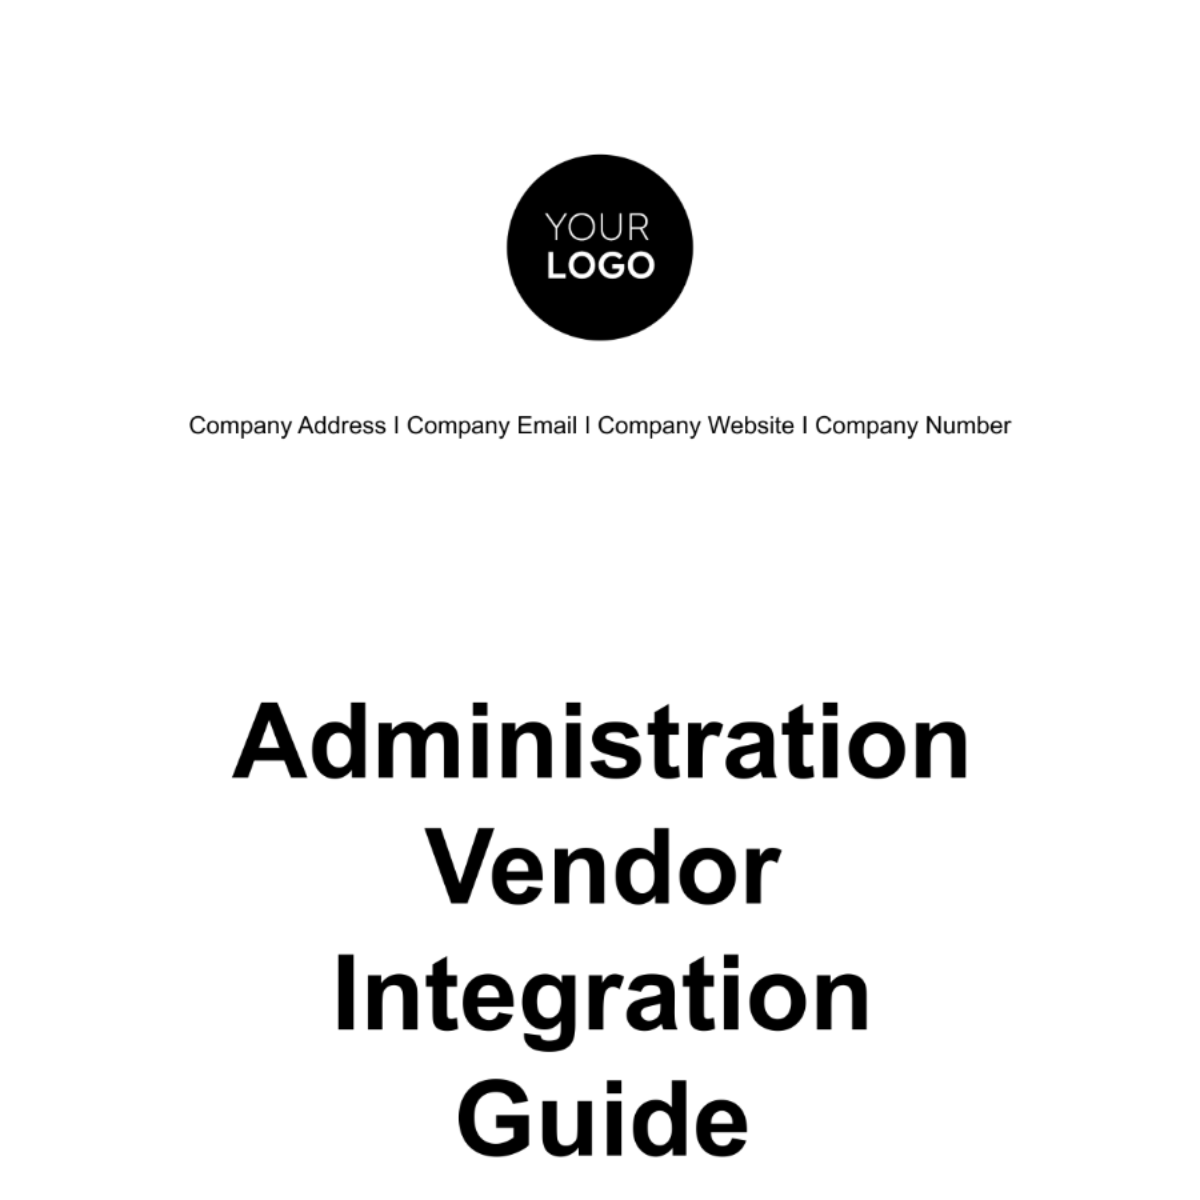 Administration Vendor Integration Guide Template